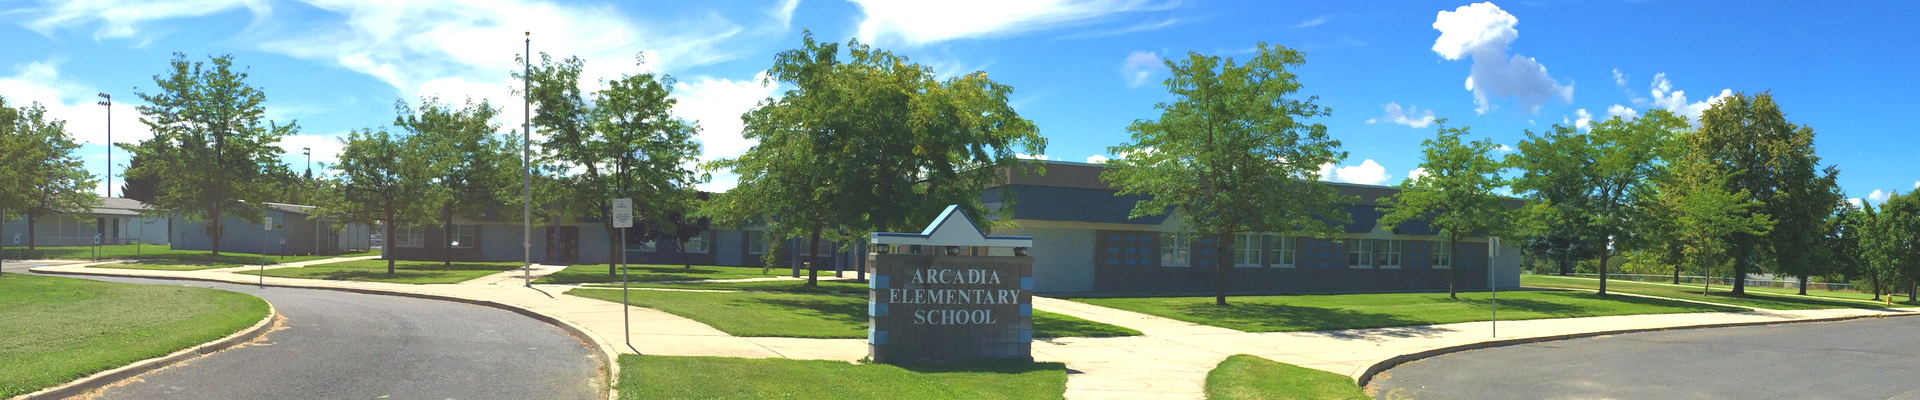 arcadia elementary building